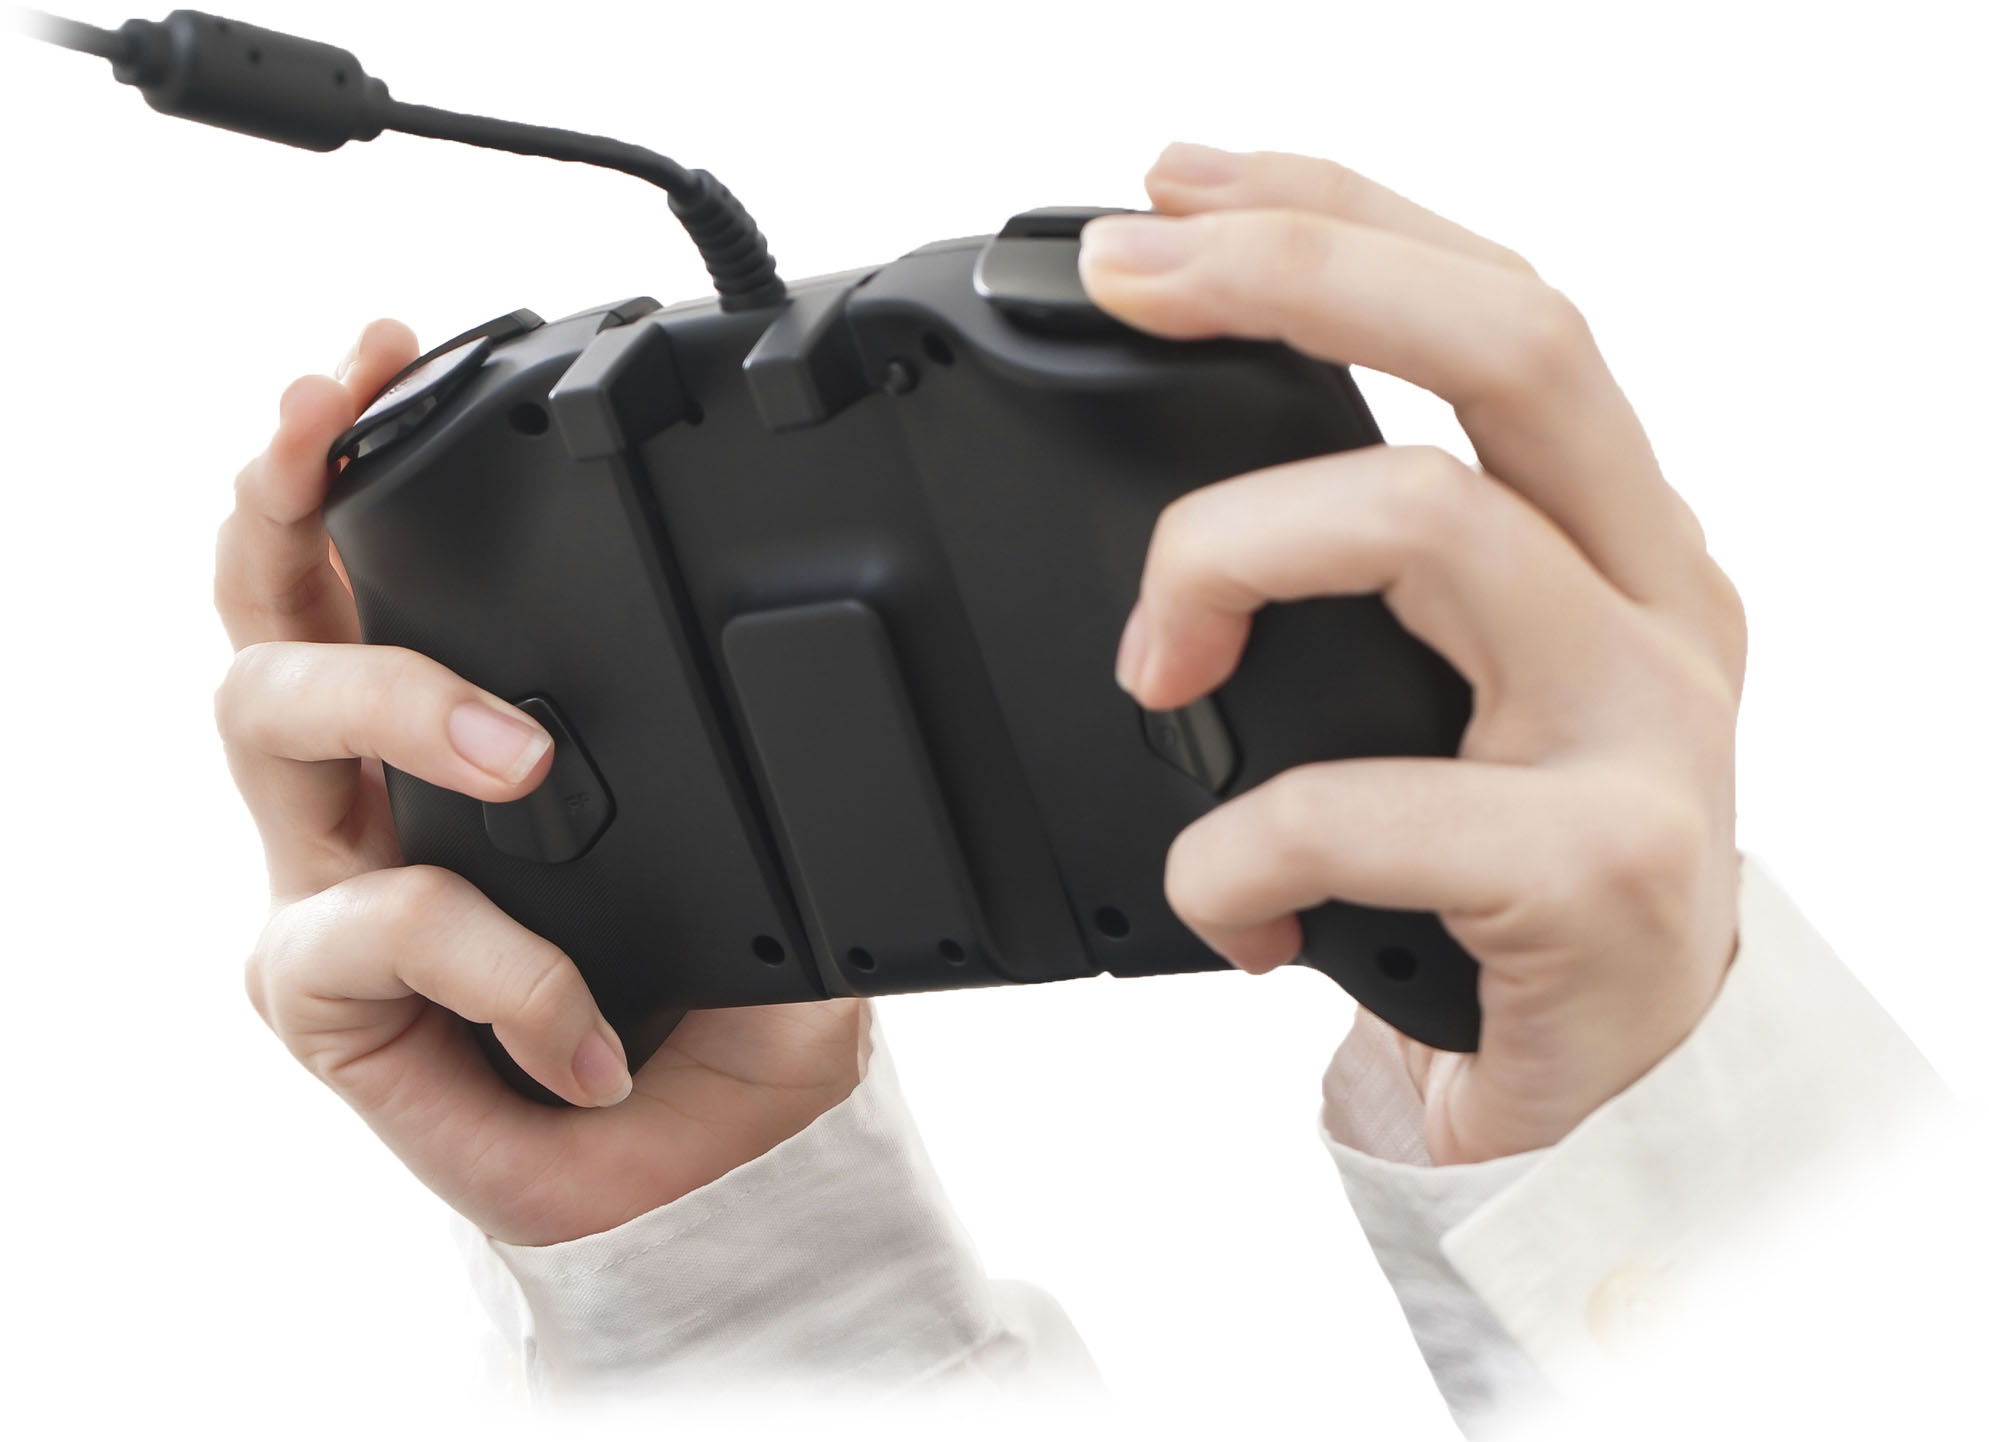 Split for Black - Nintendo NSW-371U Pro Hori Attachment Buy Pad Switch Set Best